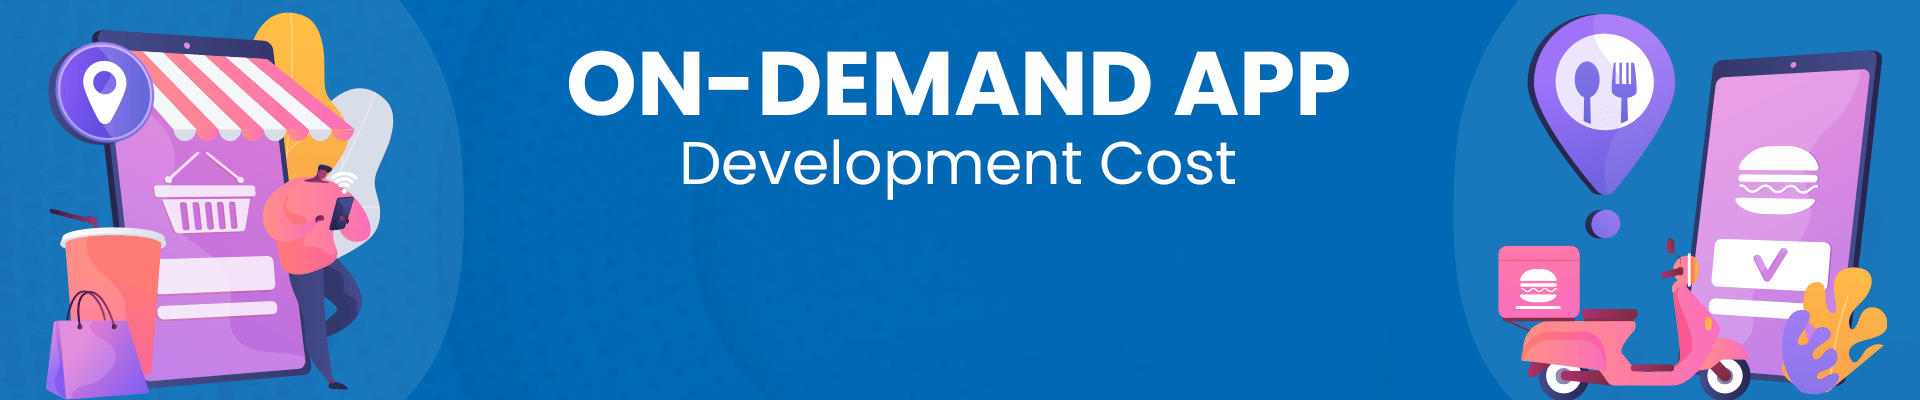 On-demand application development cost